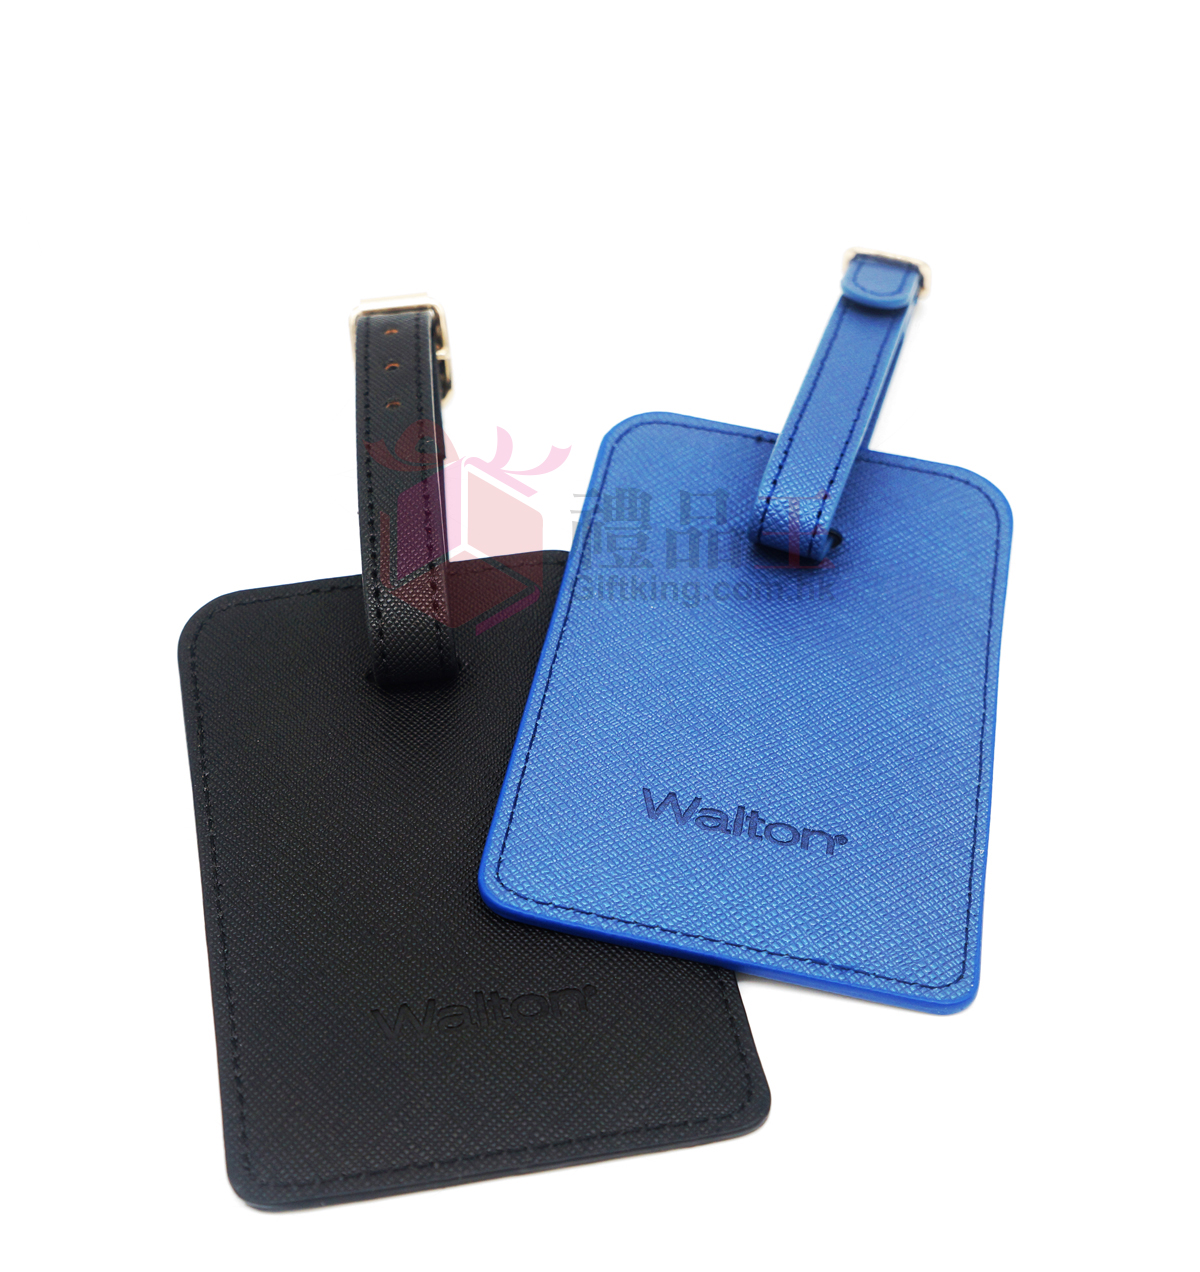 Walton luggage tag (Travel gift)